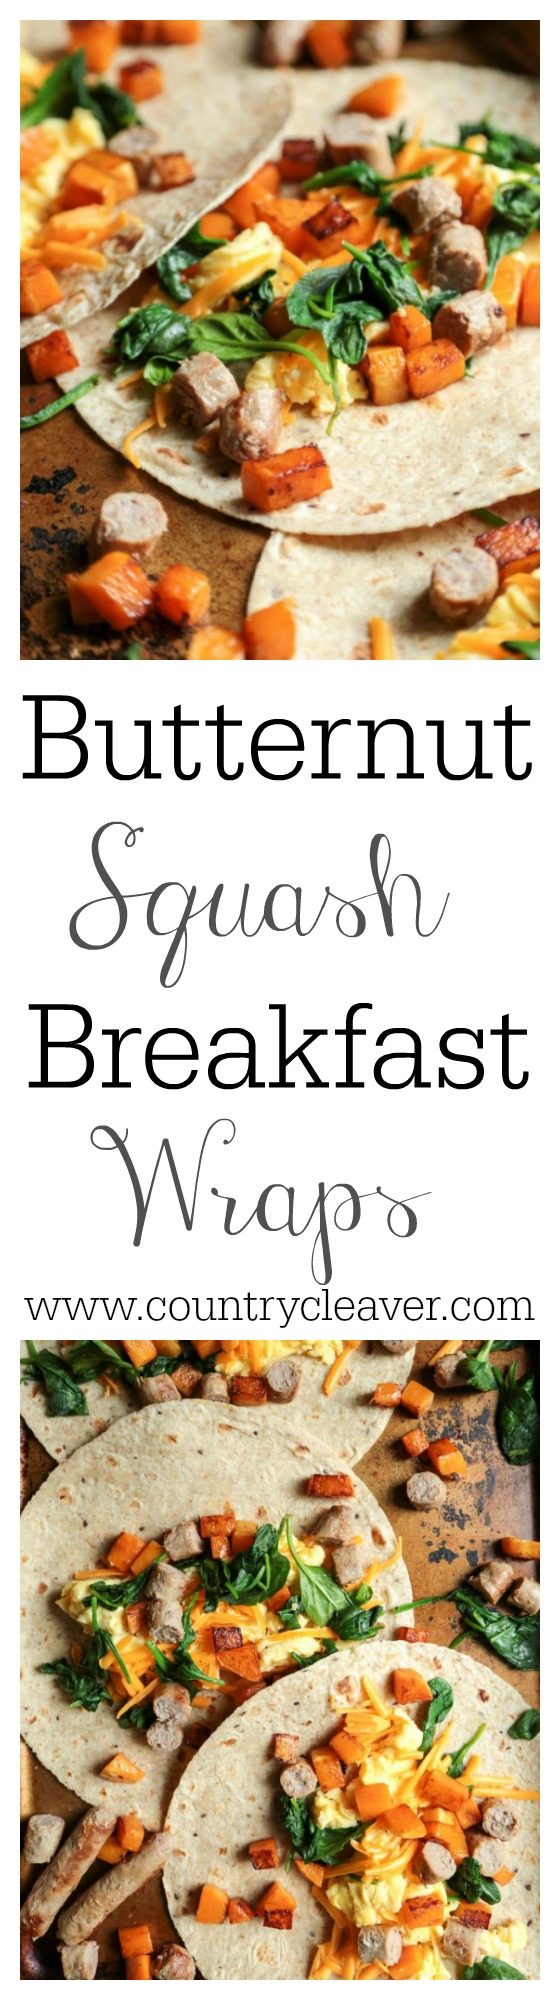 Butternut Squash Breakfast Wraps--www.countrycleaver.com